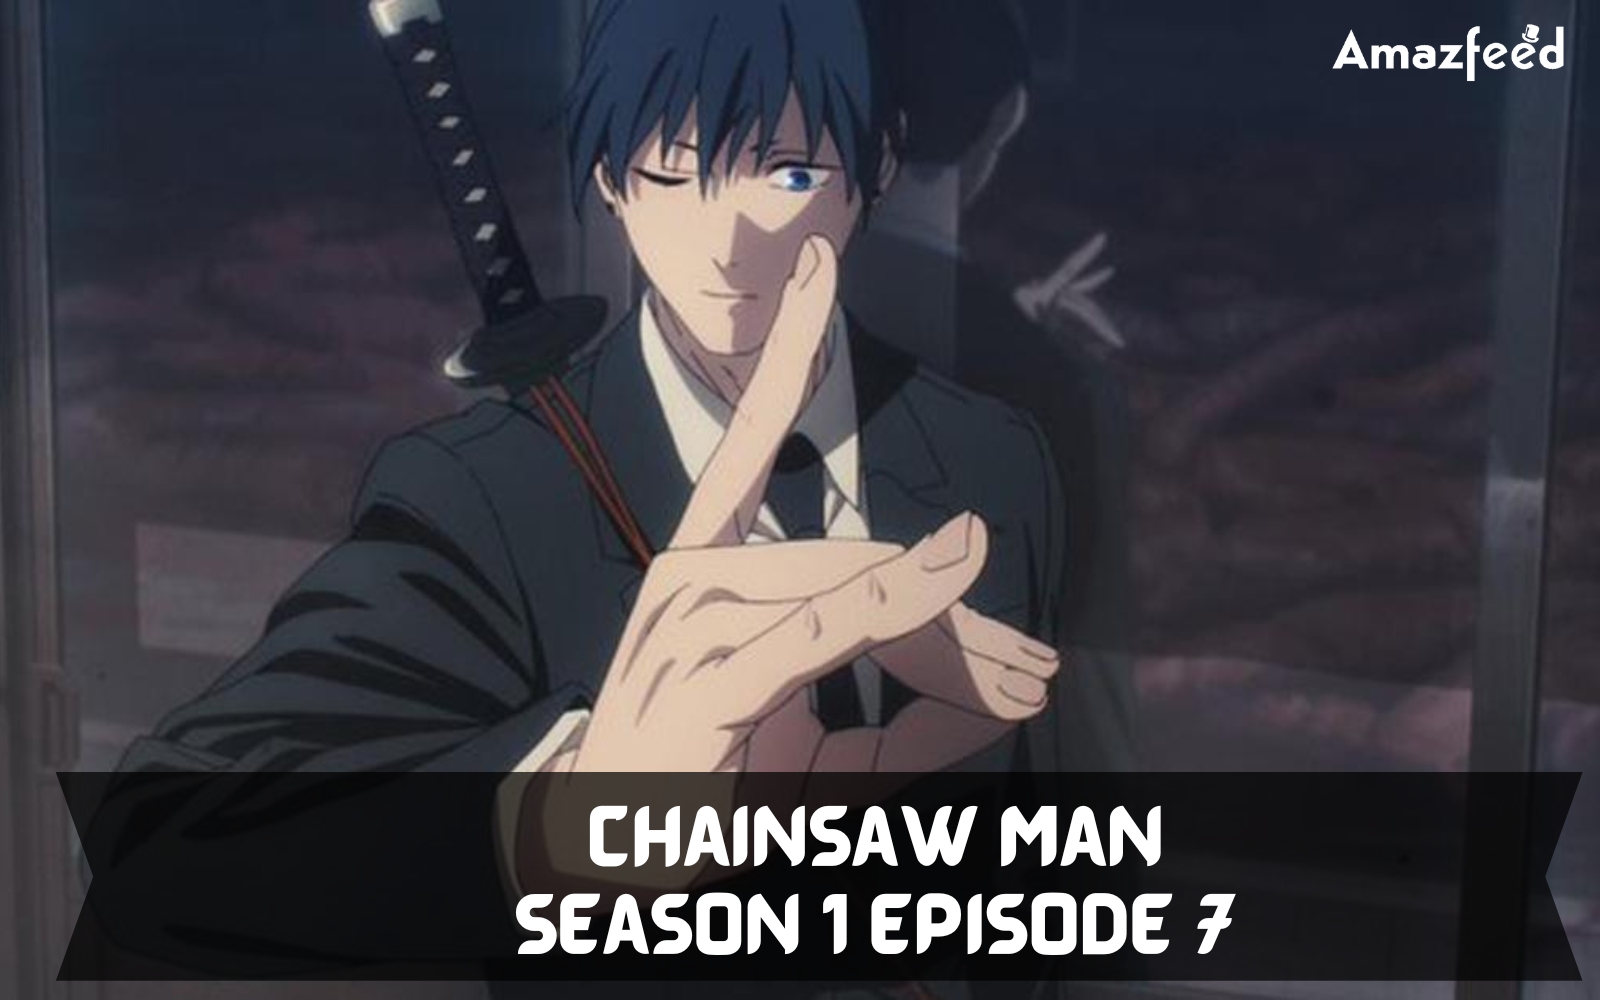 Chainsaw Man season 1, episode 7 recap - “Taste of a Kiss”